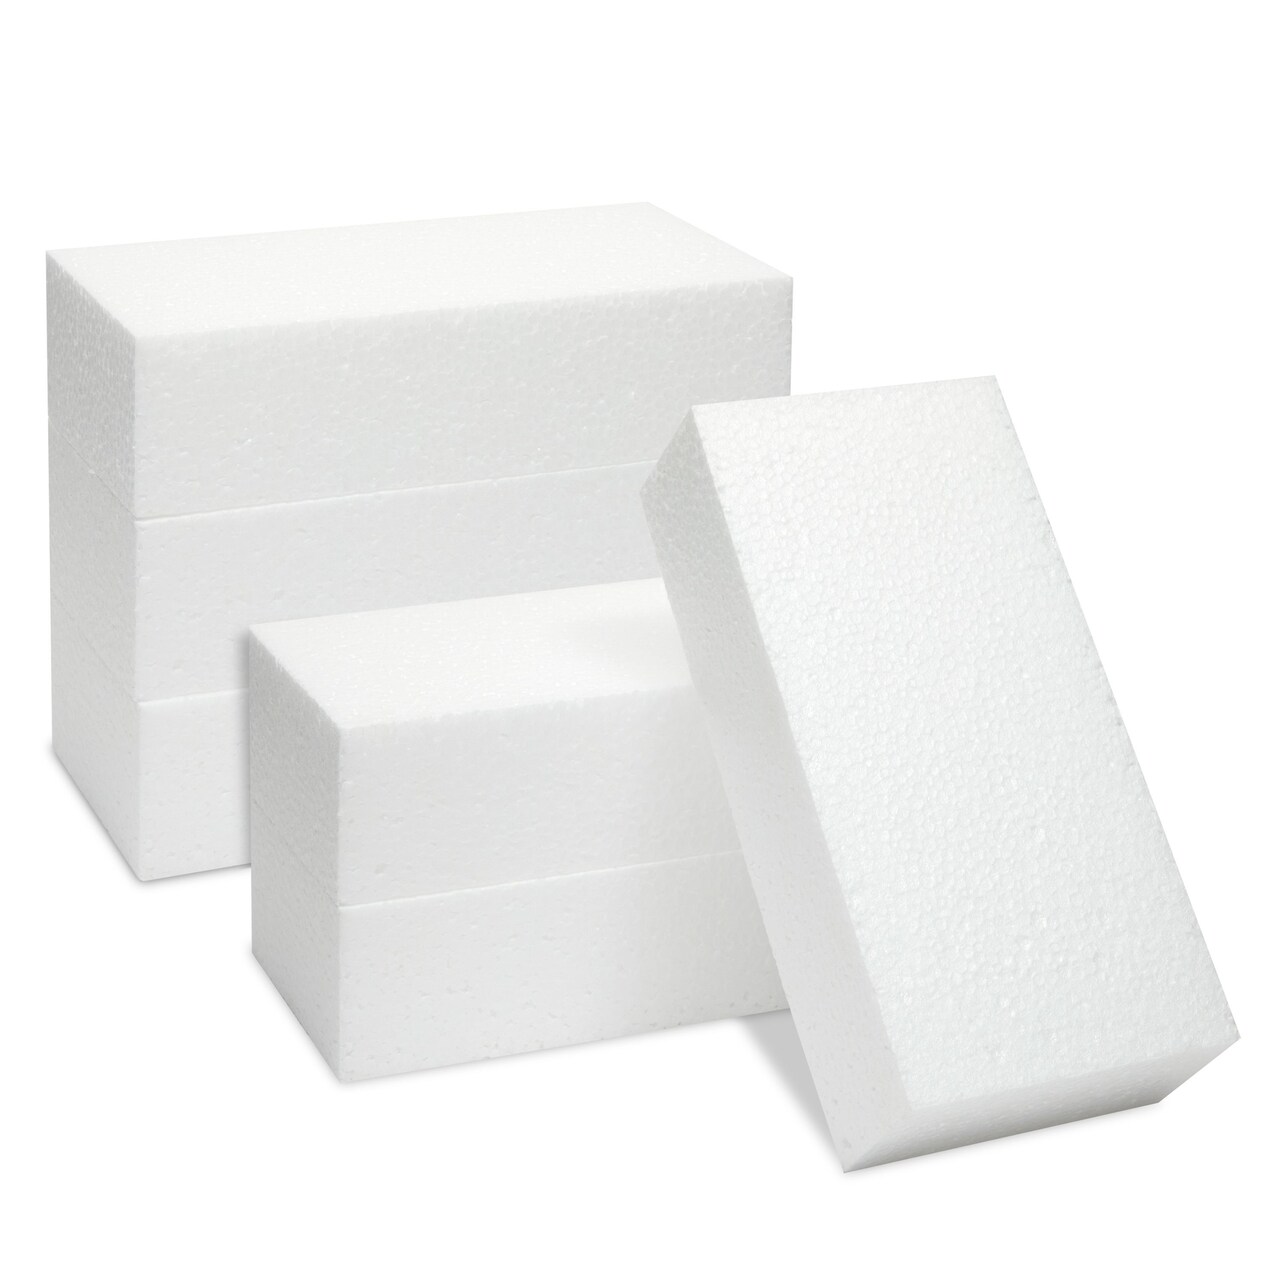 6 Pack Foam Blocks for Crafts - Polystyrene Brick Rectangles for